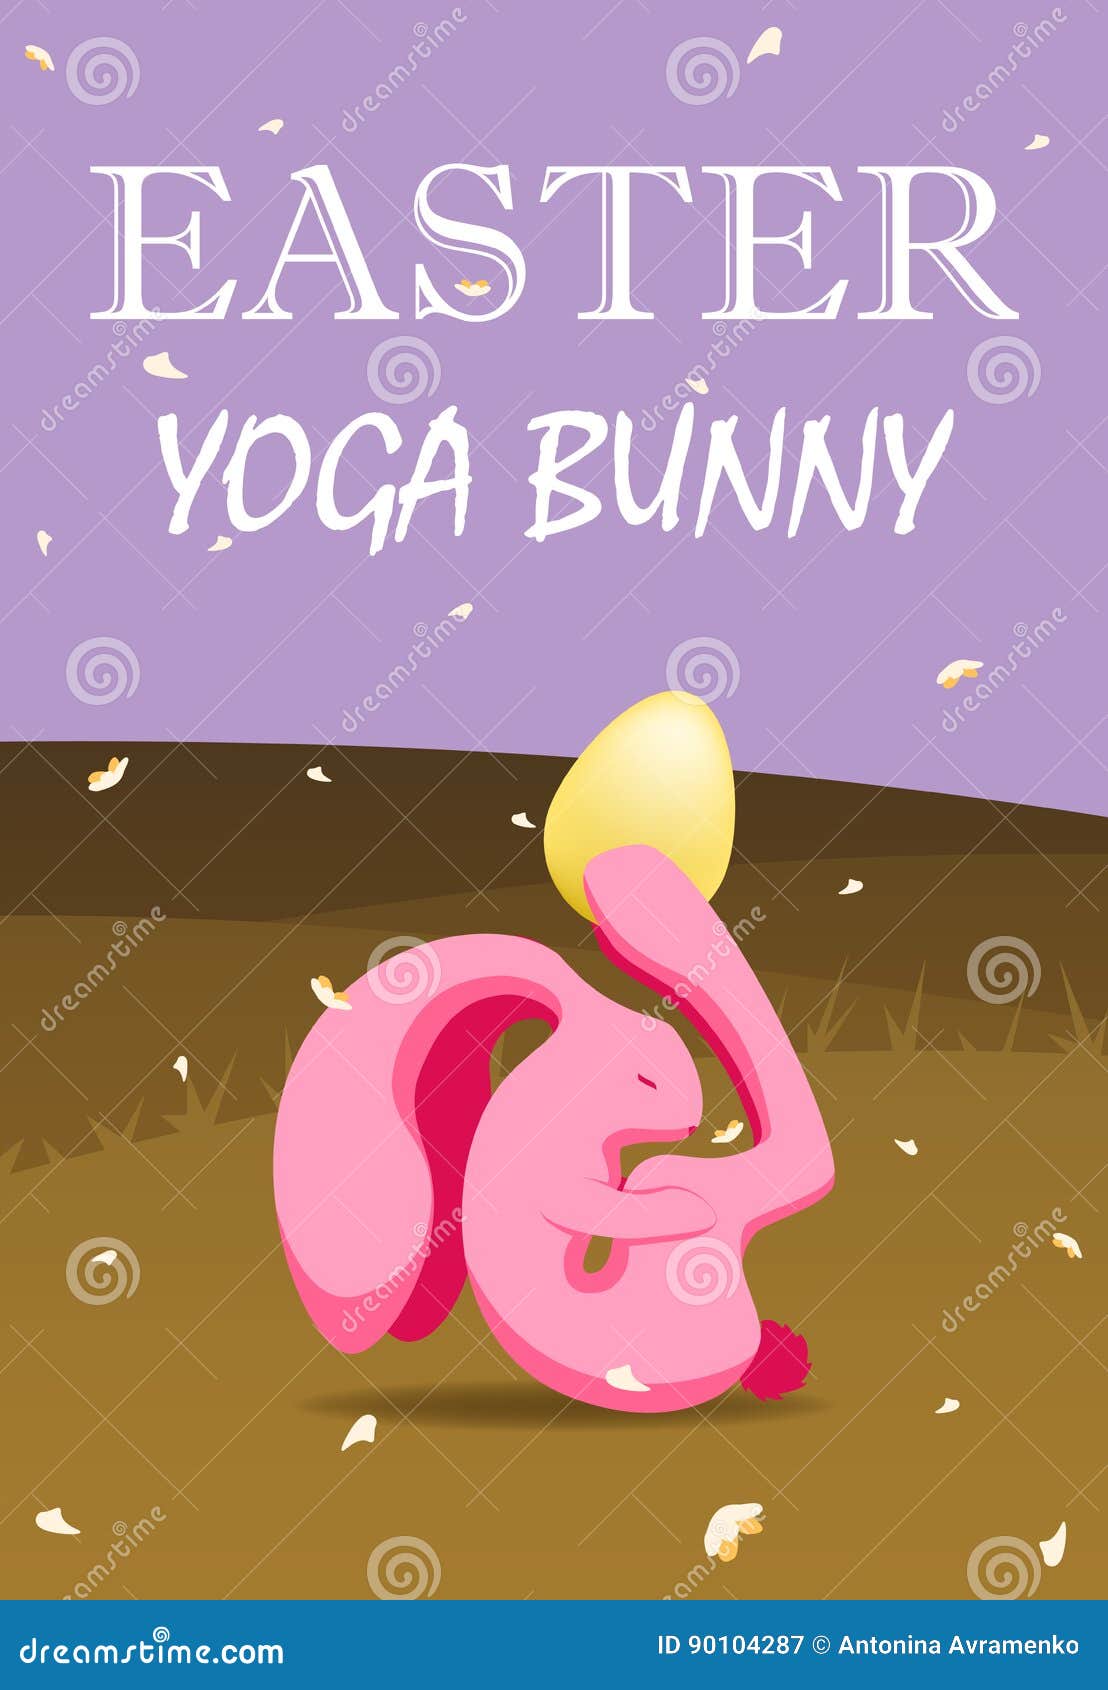 https://thumbs.dreamstime.com/z/easter-yoga-bunny-holding-egg-pose-90104287.jpg